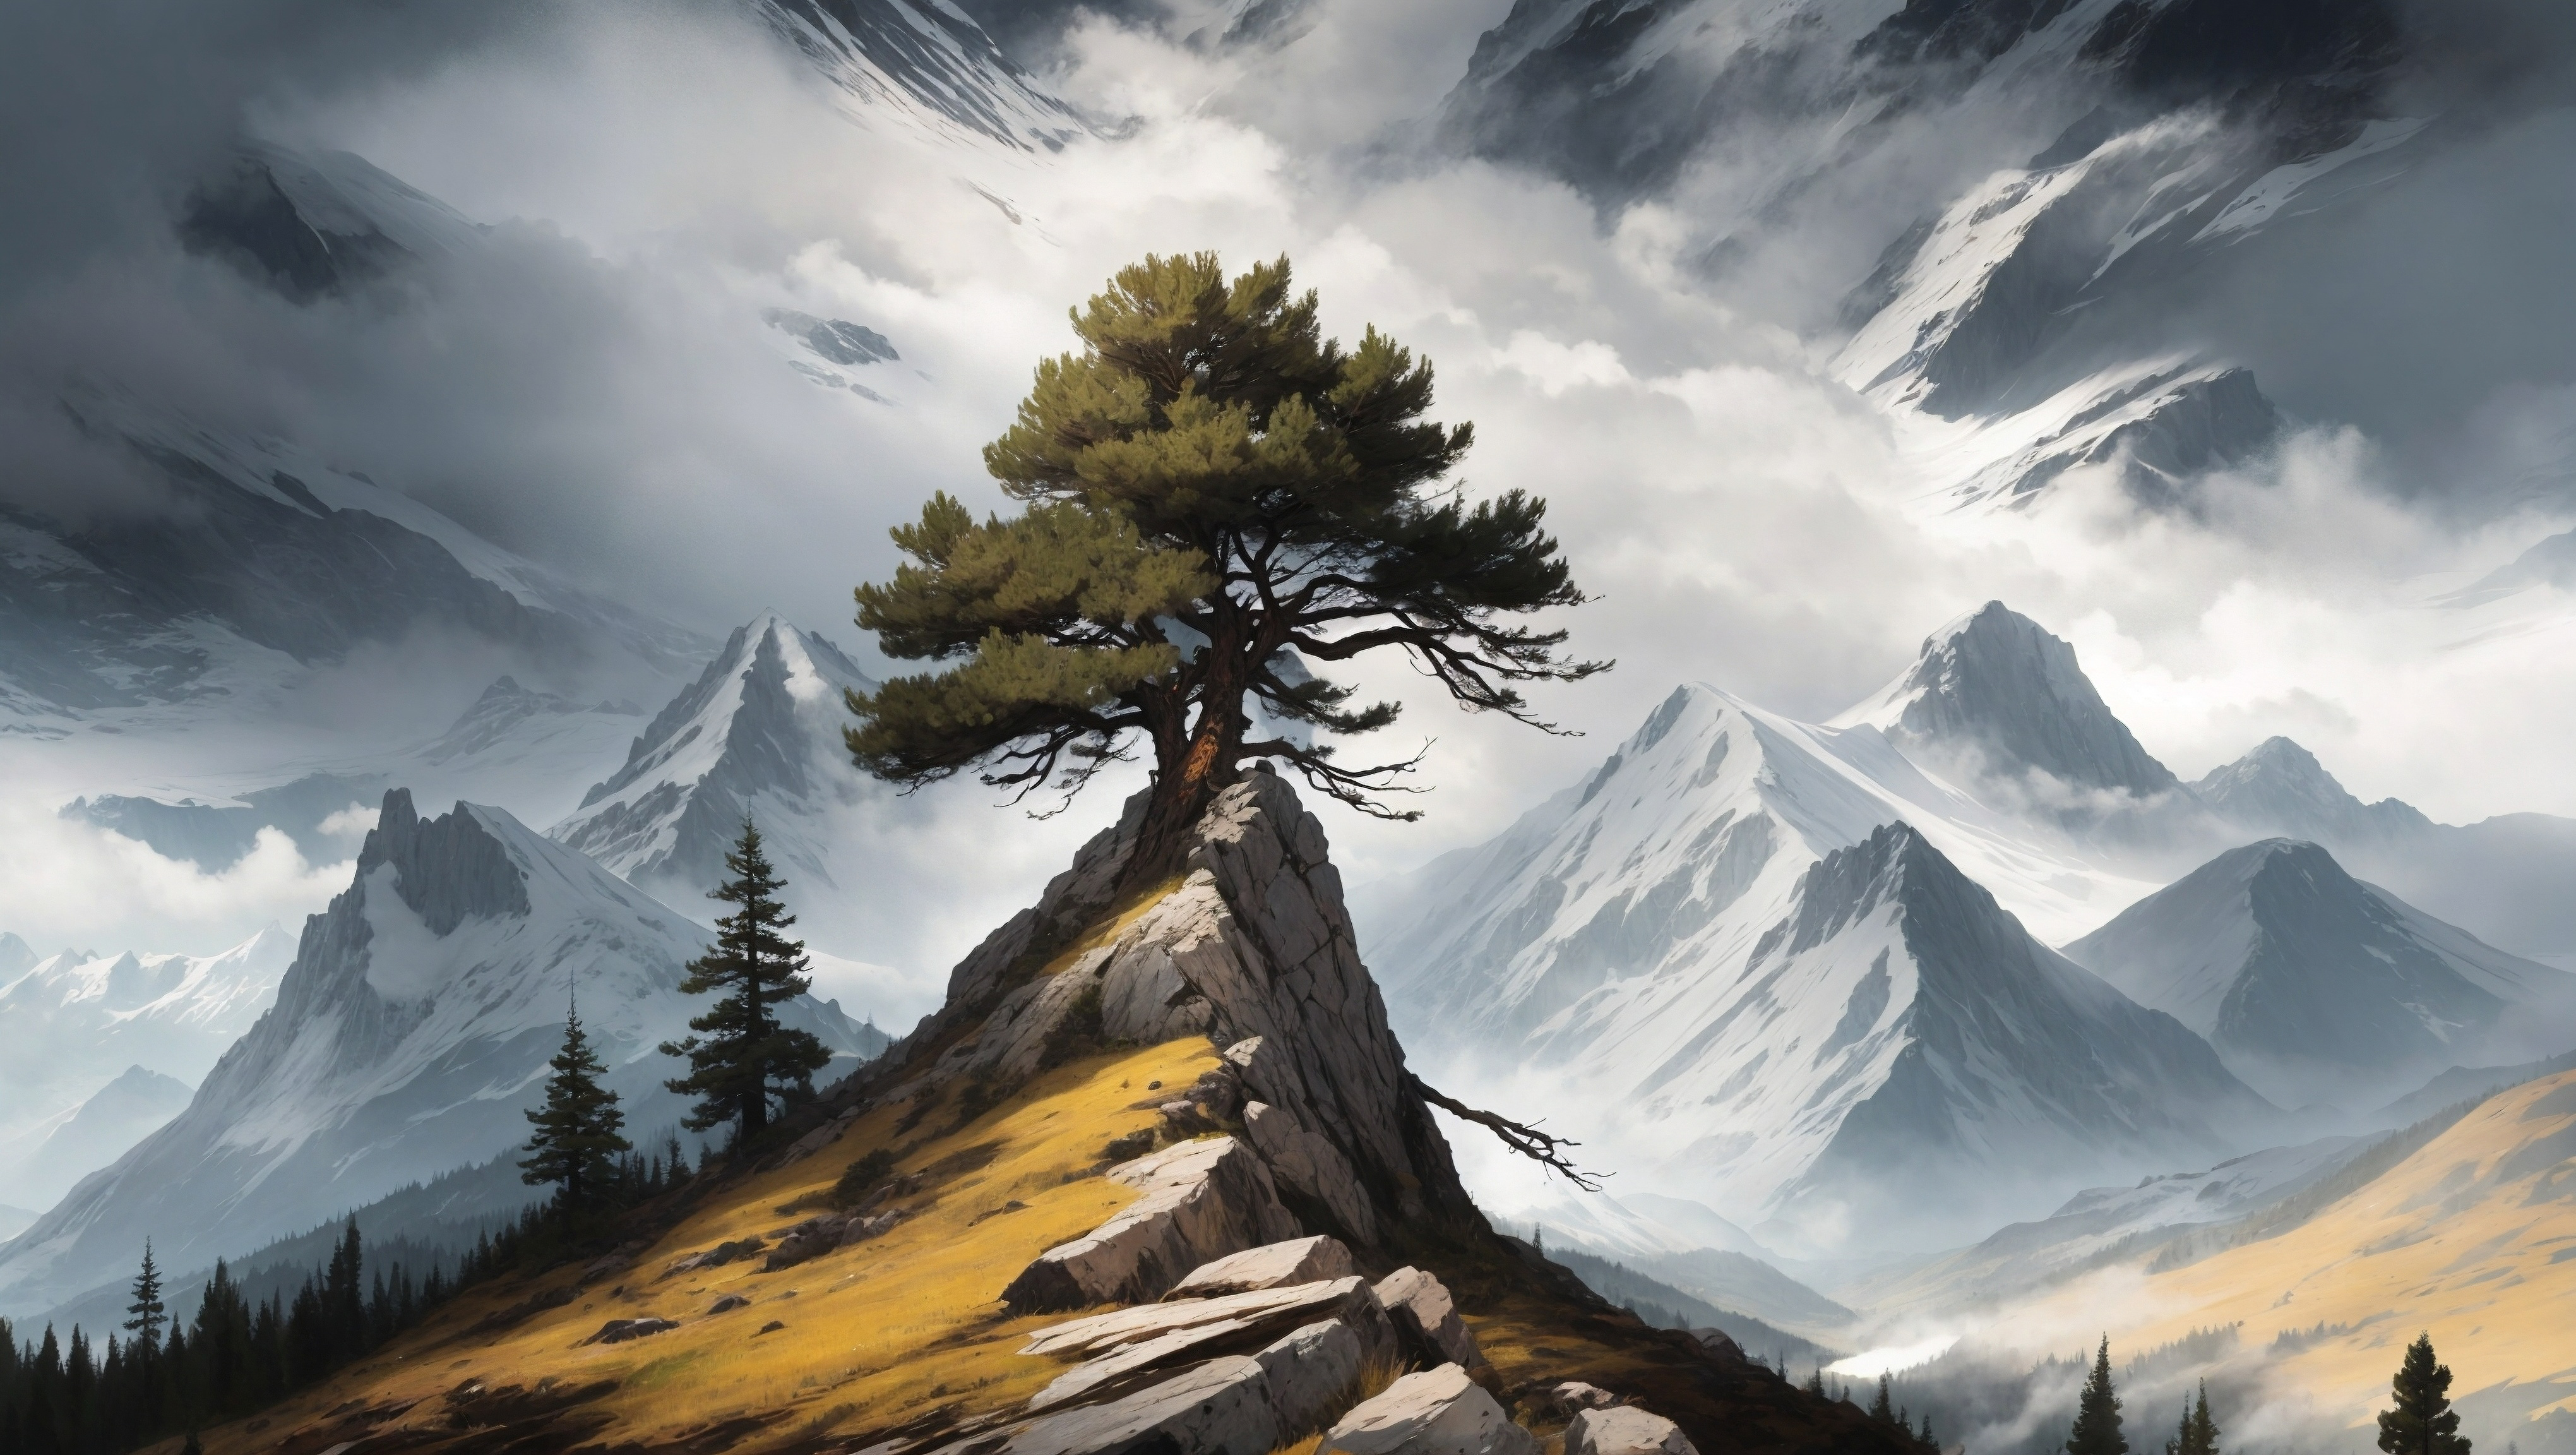 General 4080x2304 AI art digital art digital painting landscape mountains fir-tree trees snow storm nature snowy mountain outdoors mist sky clouds